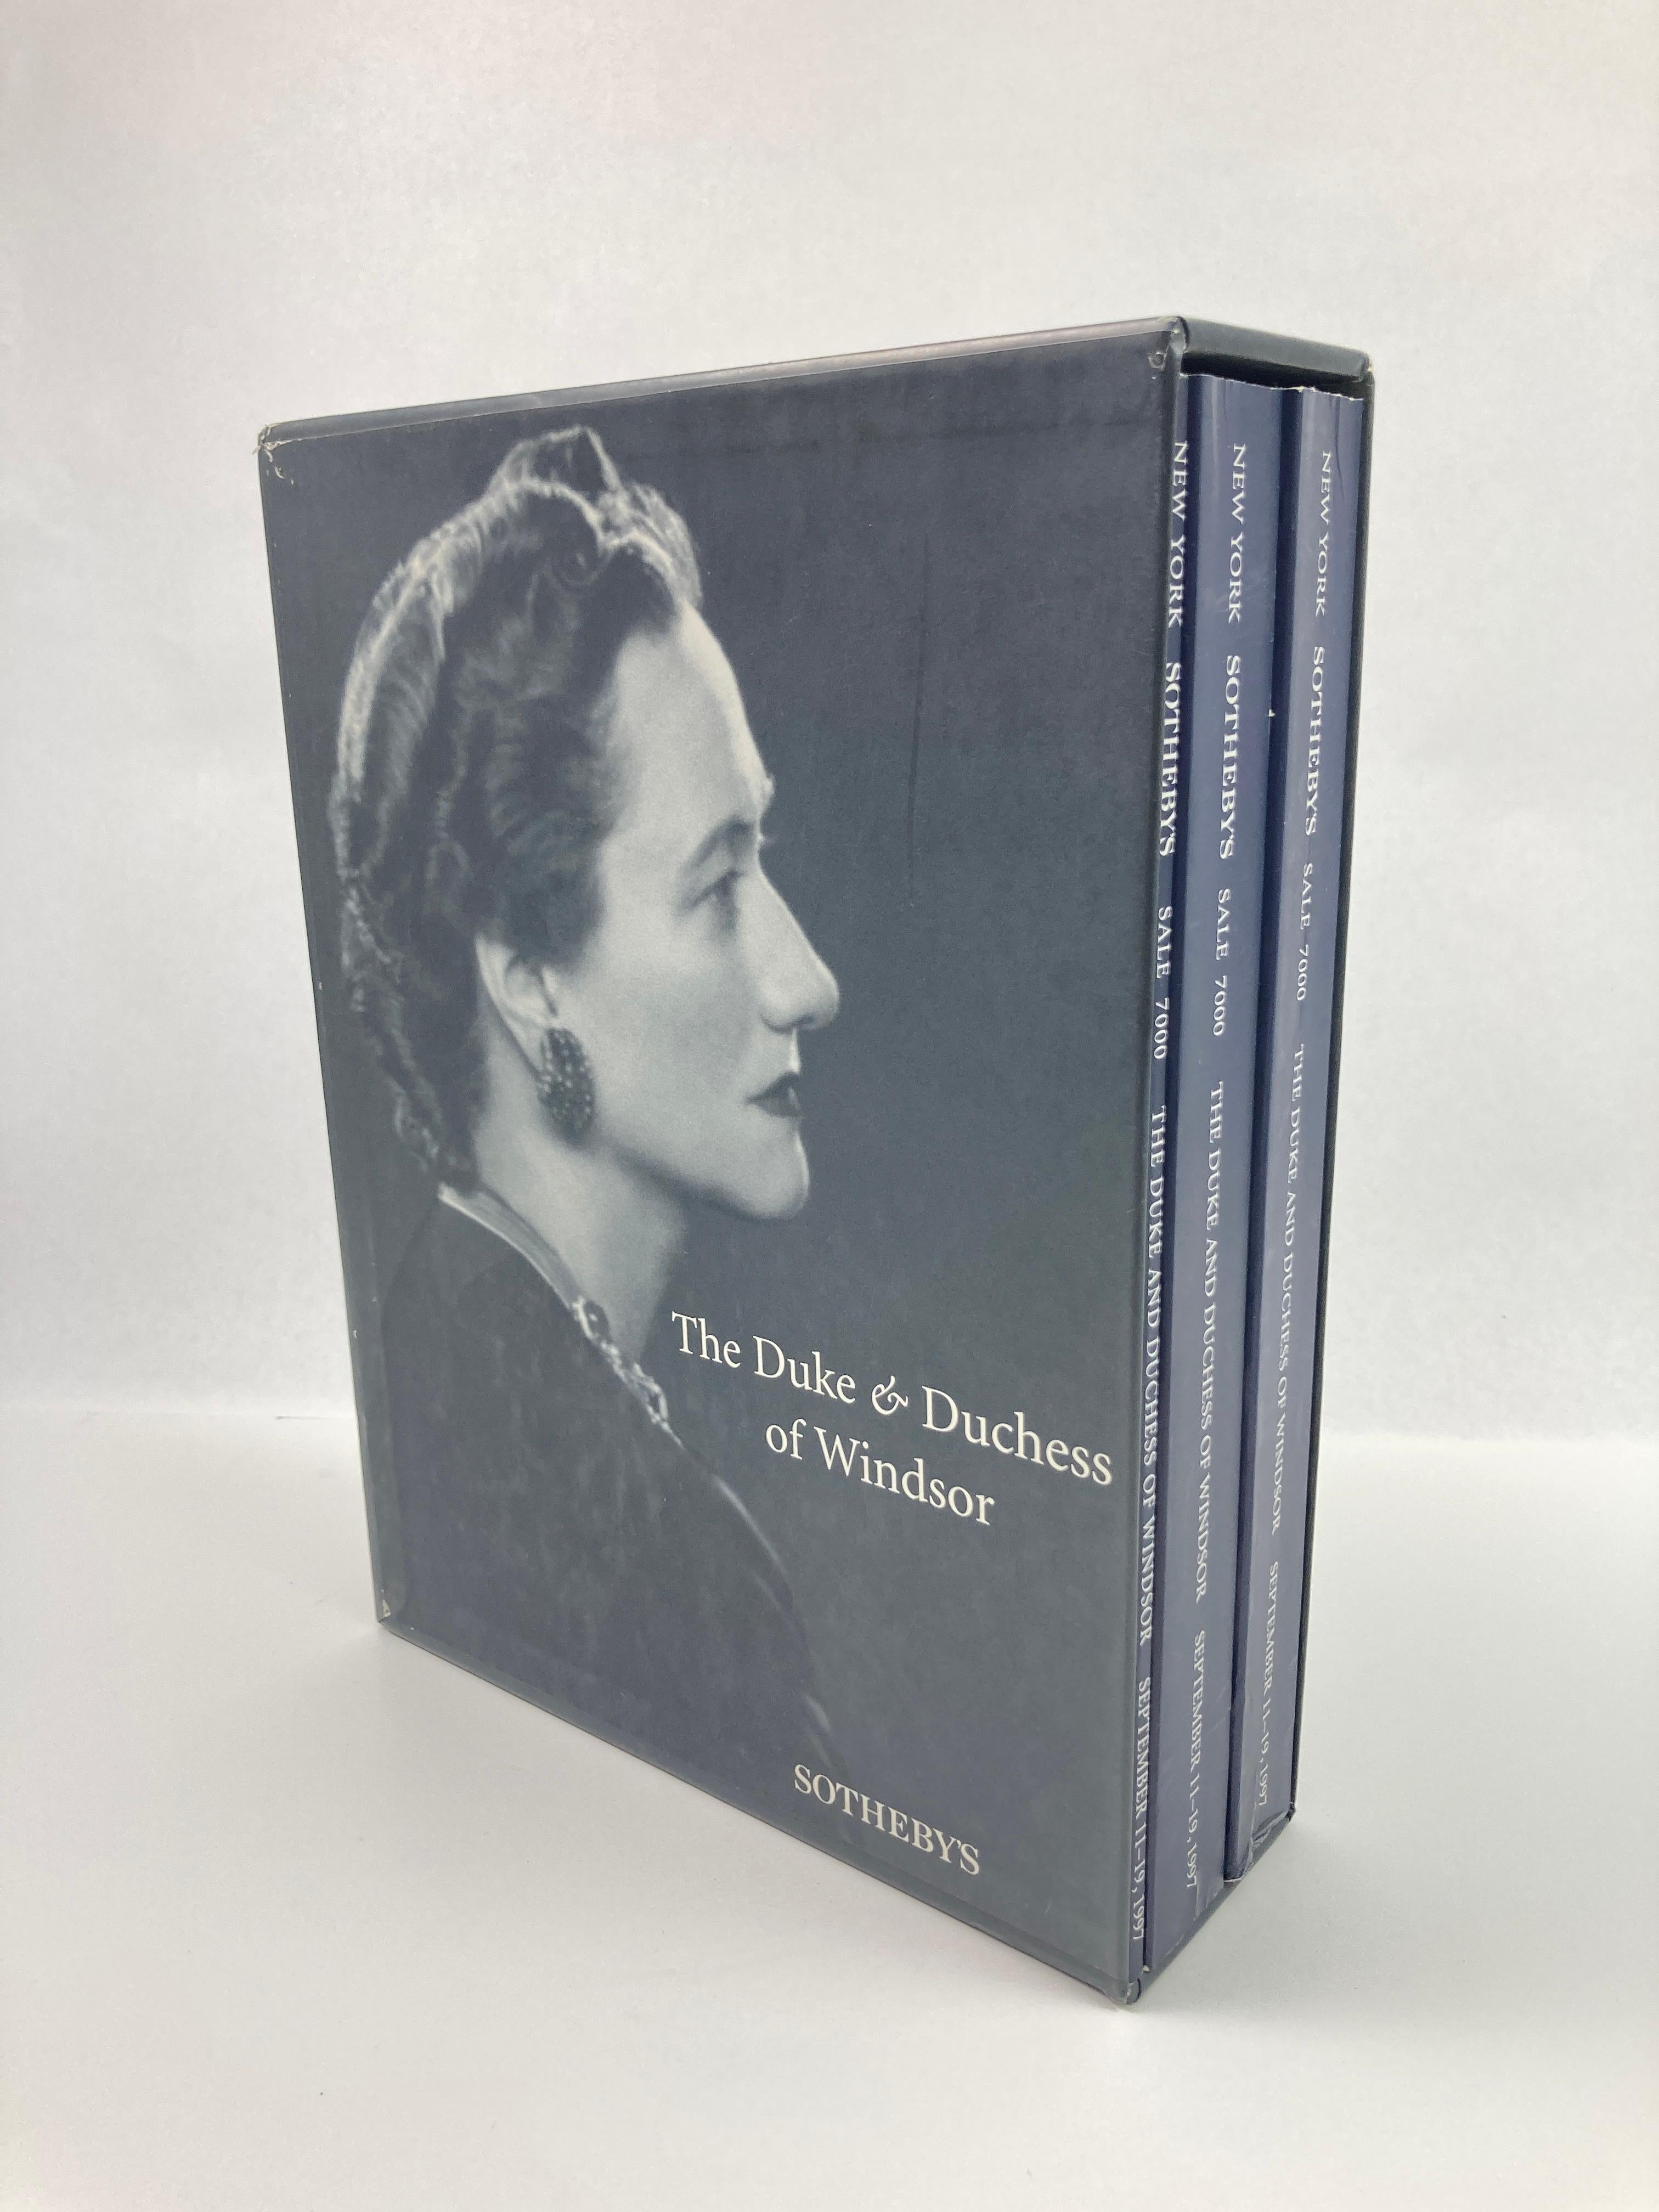 The Duke and Duchess of Windsor Auction Sothebys Books Catalogs in Slipcase Box For Sale 2